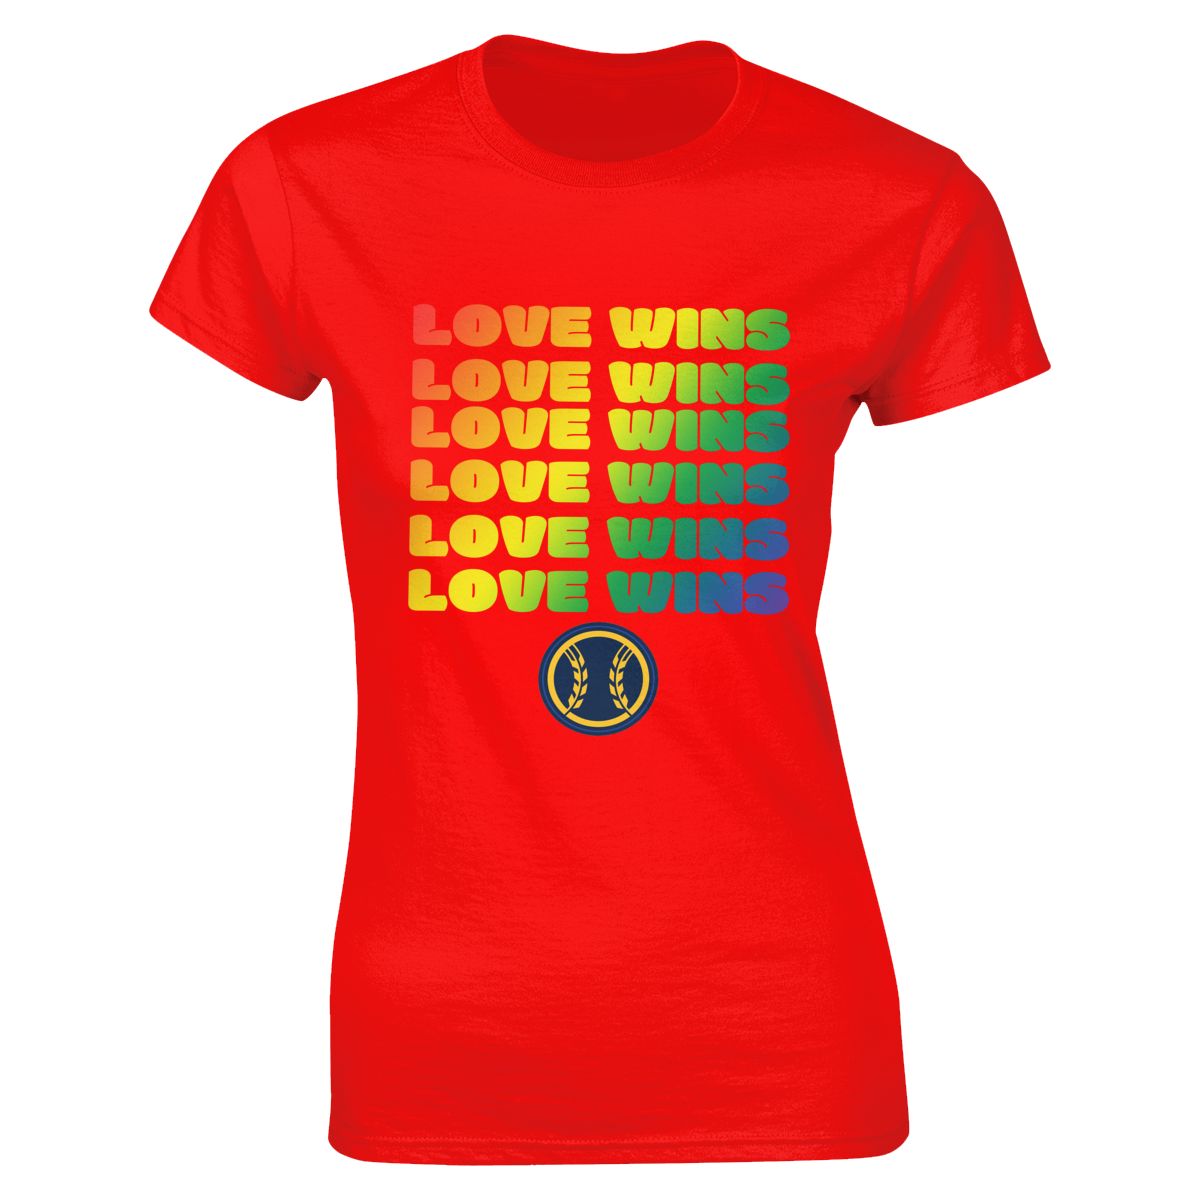 Milwaukee Brewers Love Wins Pride Women's Soft Cotton T-Shirt